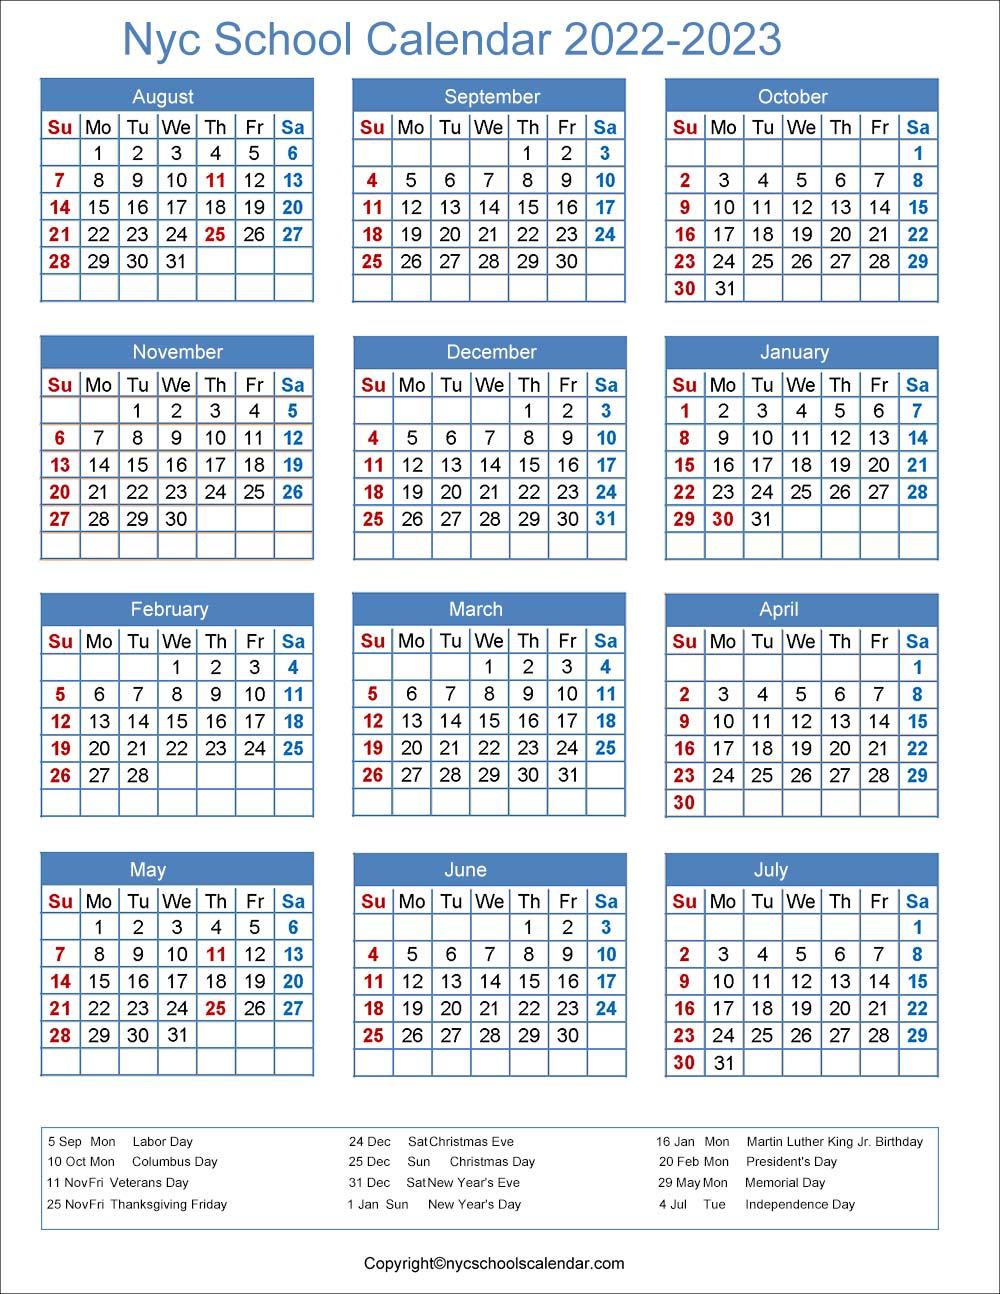 Calendar 2022 Nyc  Latest News Update regarding 2022 2023 School Calendar Nyc